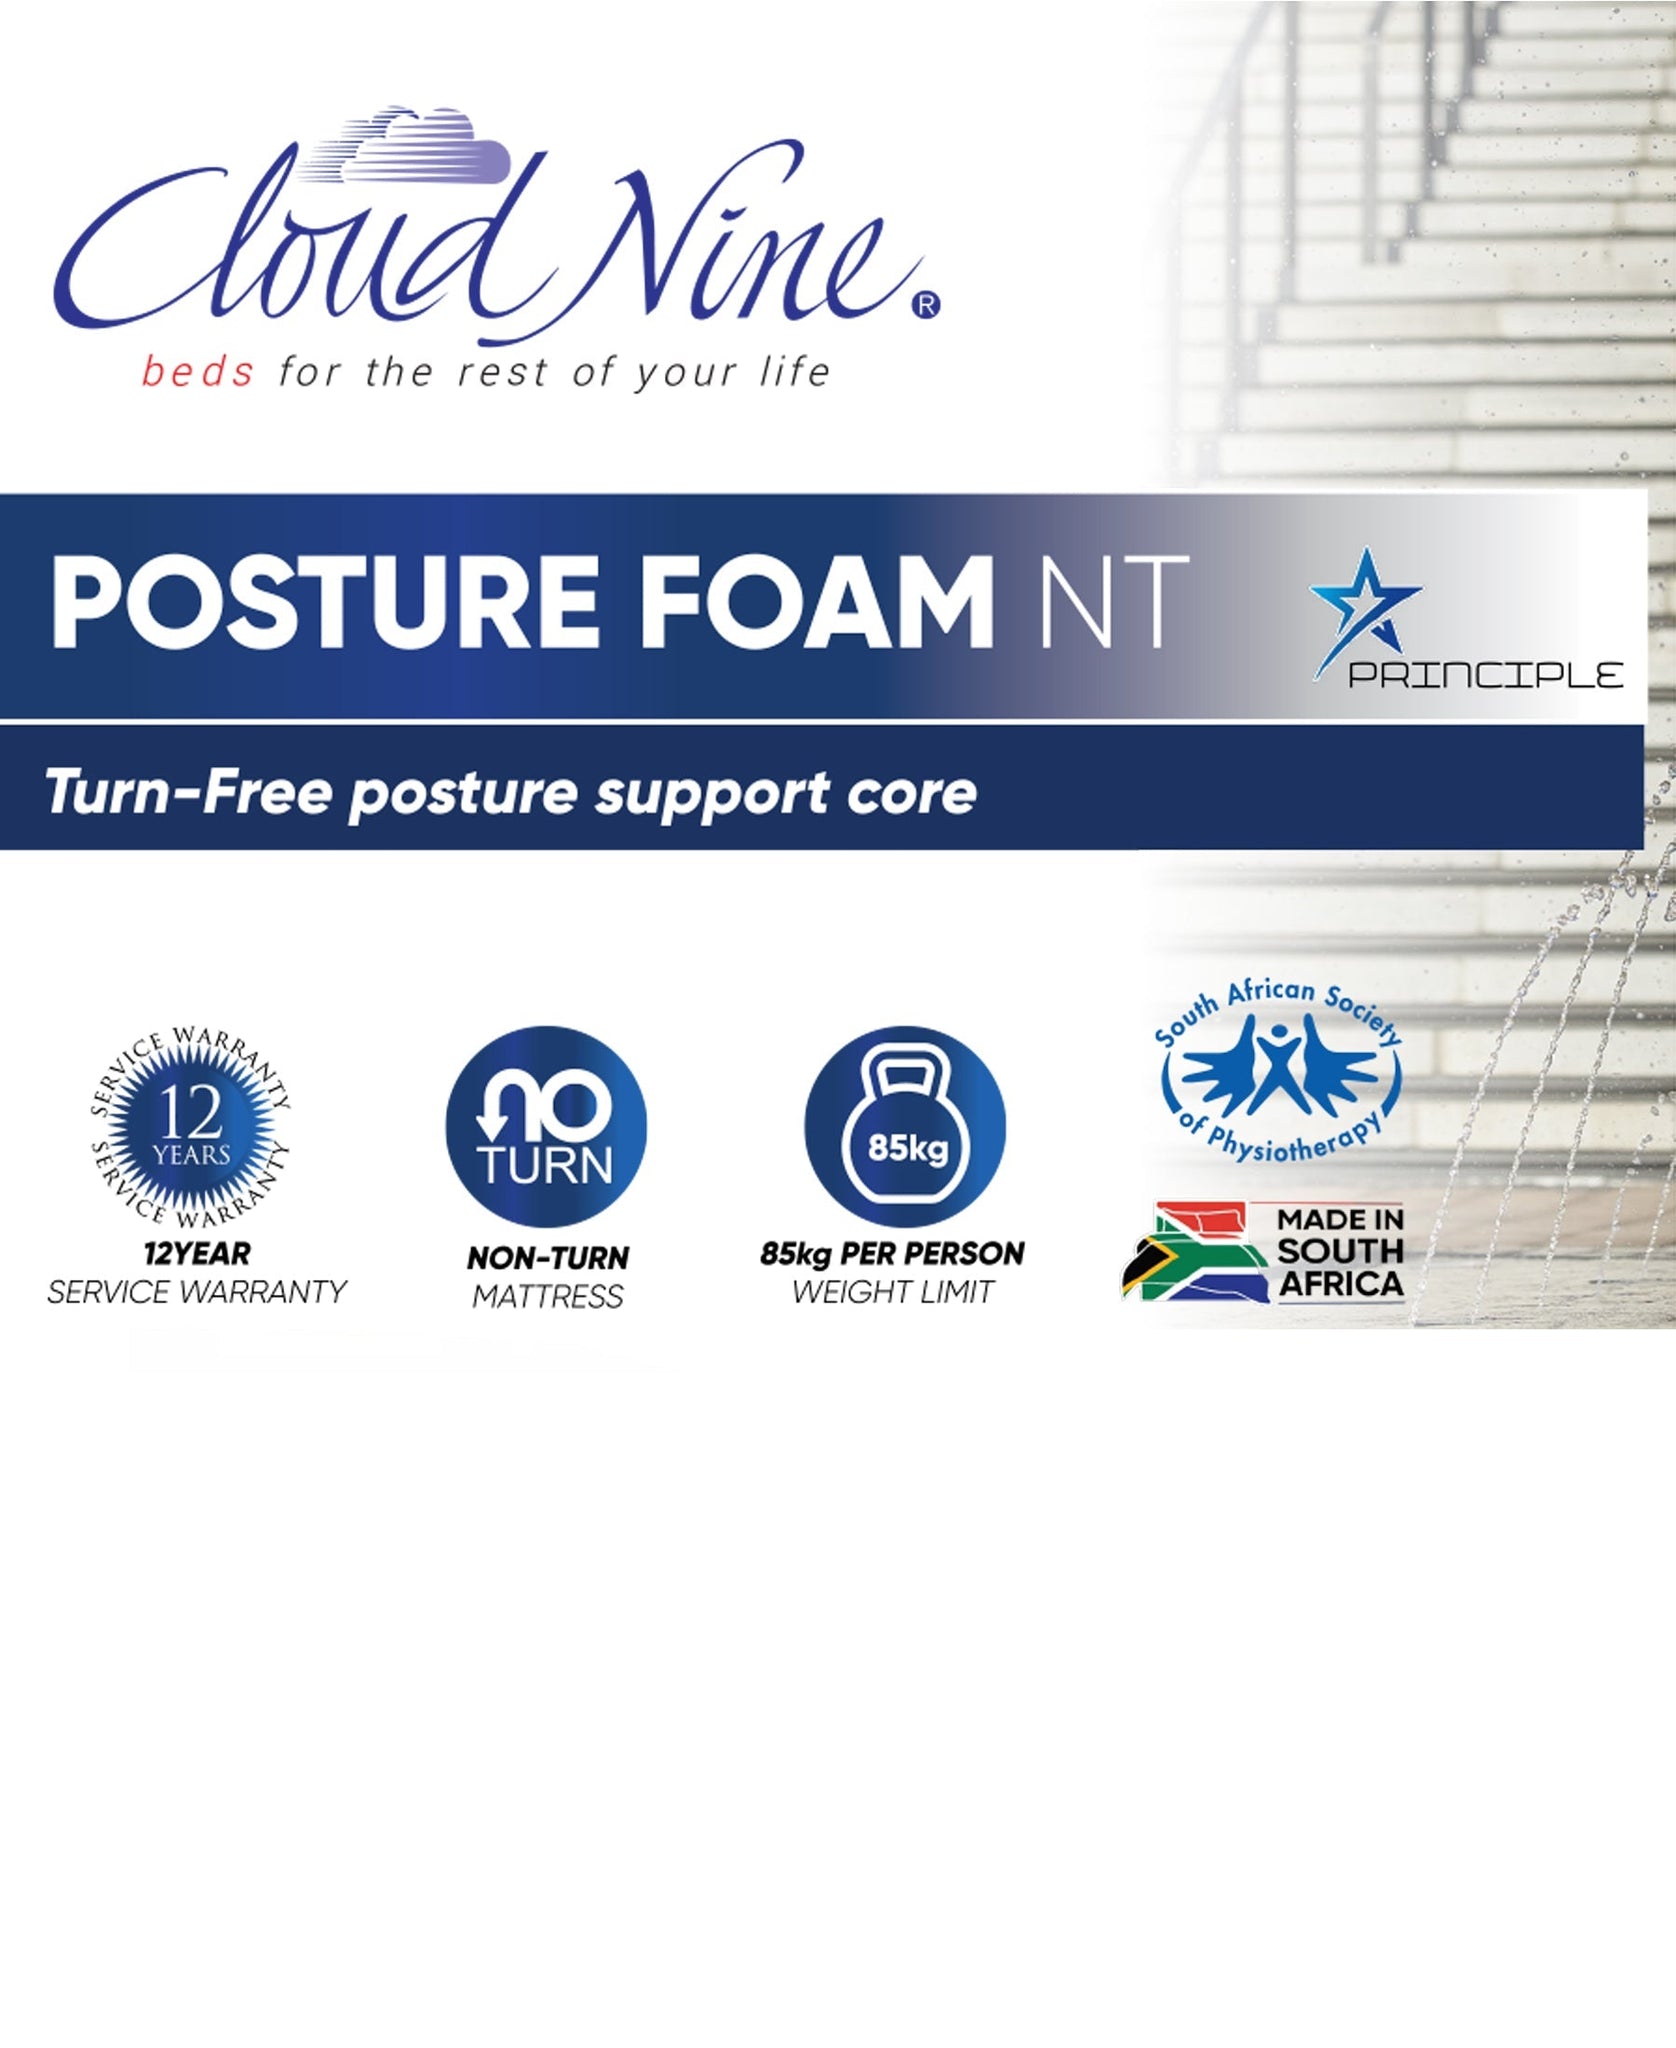 Cloud Nine Posture Foam NT Bed Single